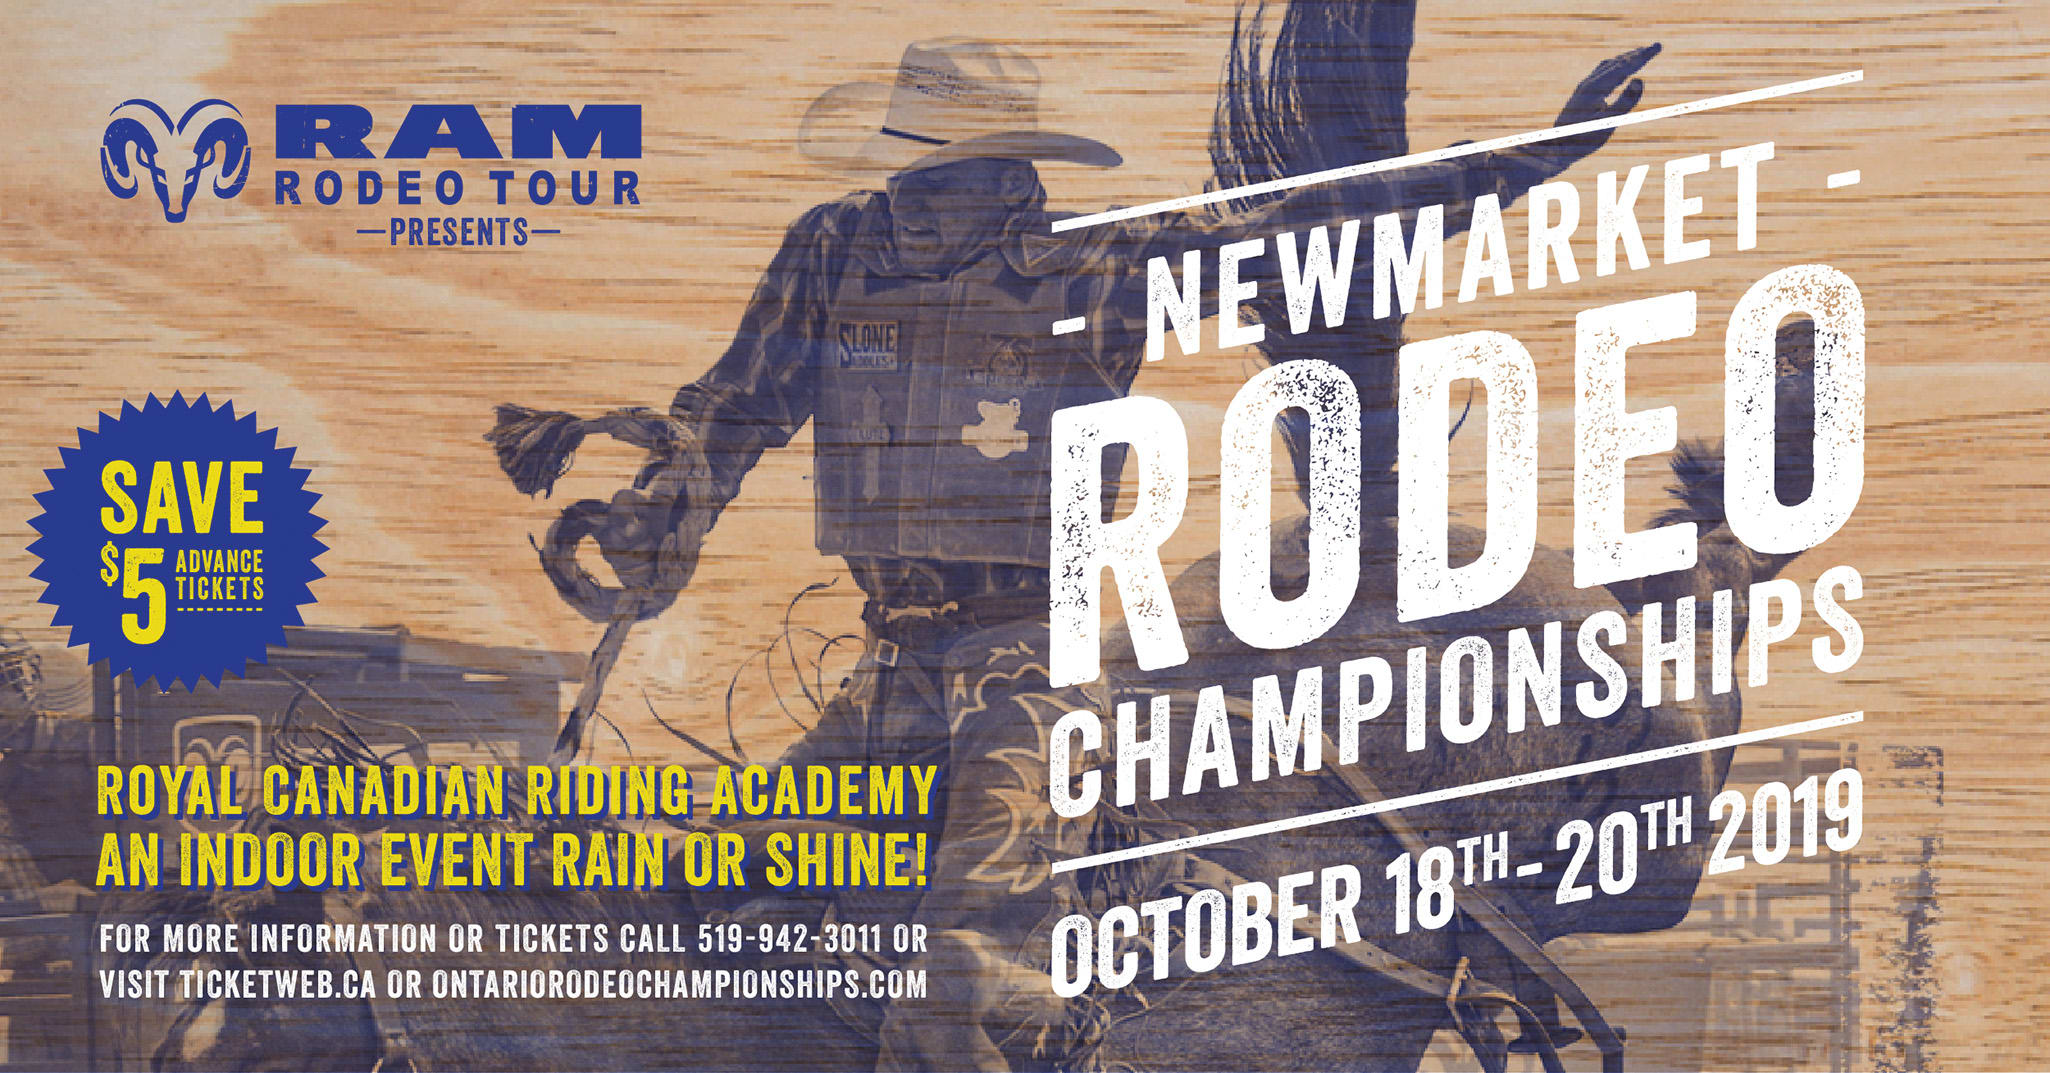 ram rodeo tour championships newmarket